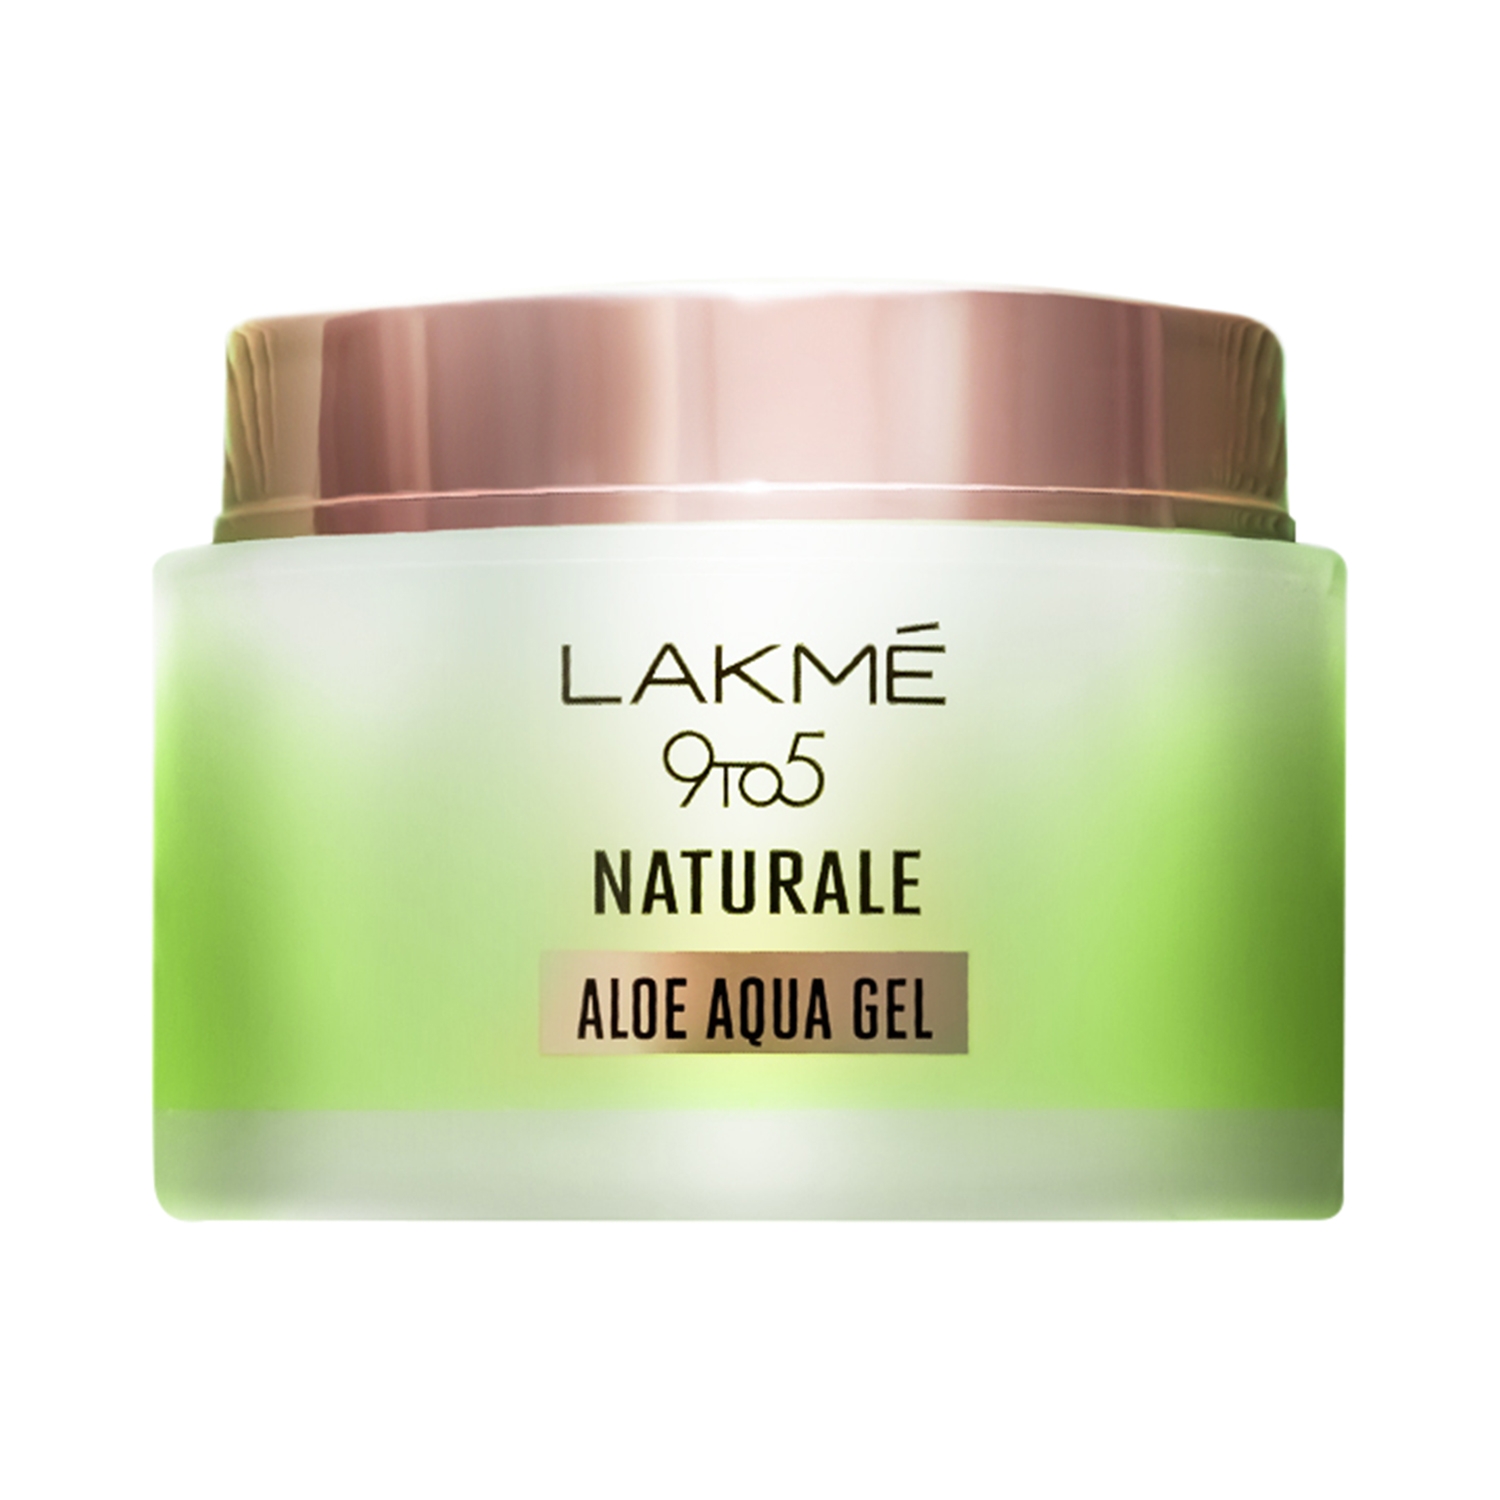 Lakme 9To5 Natural Aloe Aqua Gel (50g)